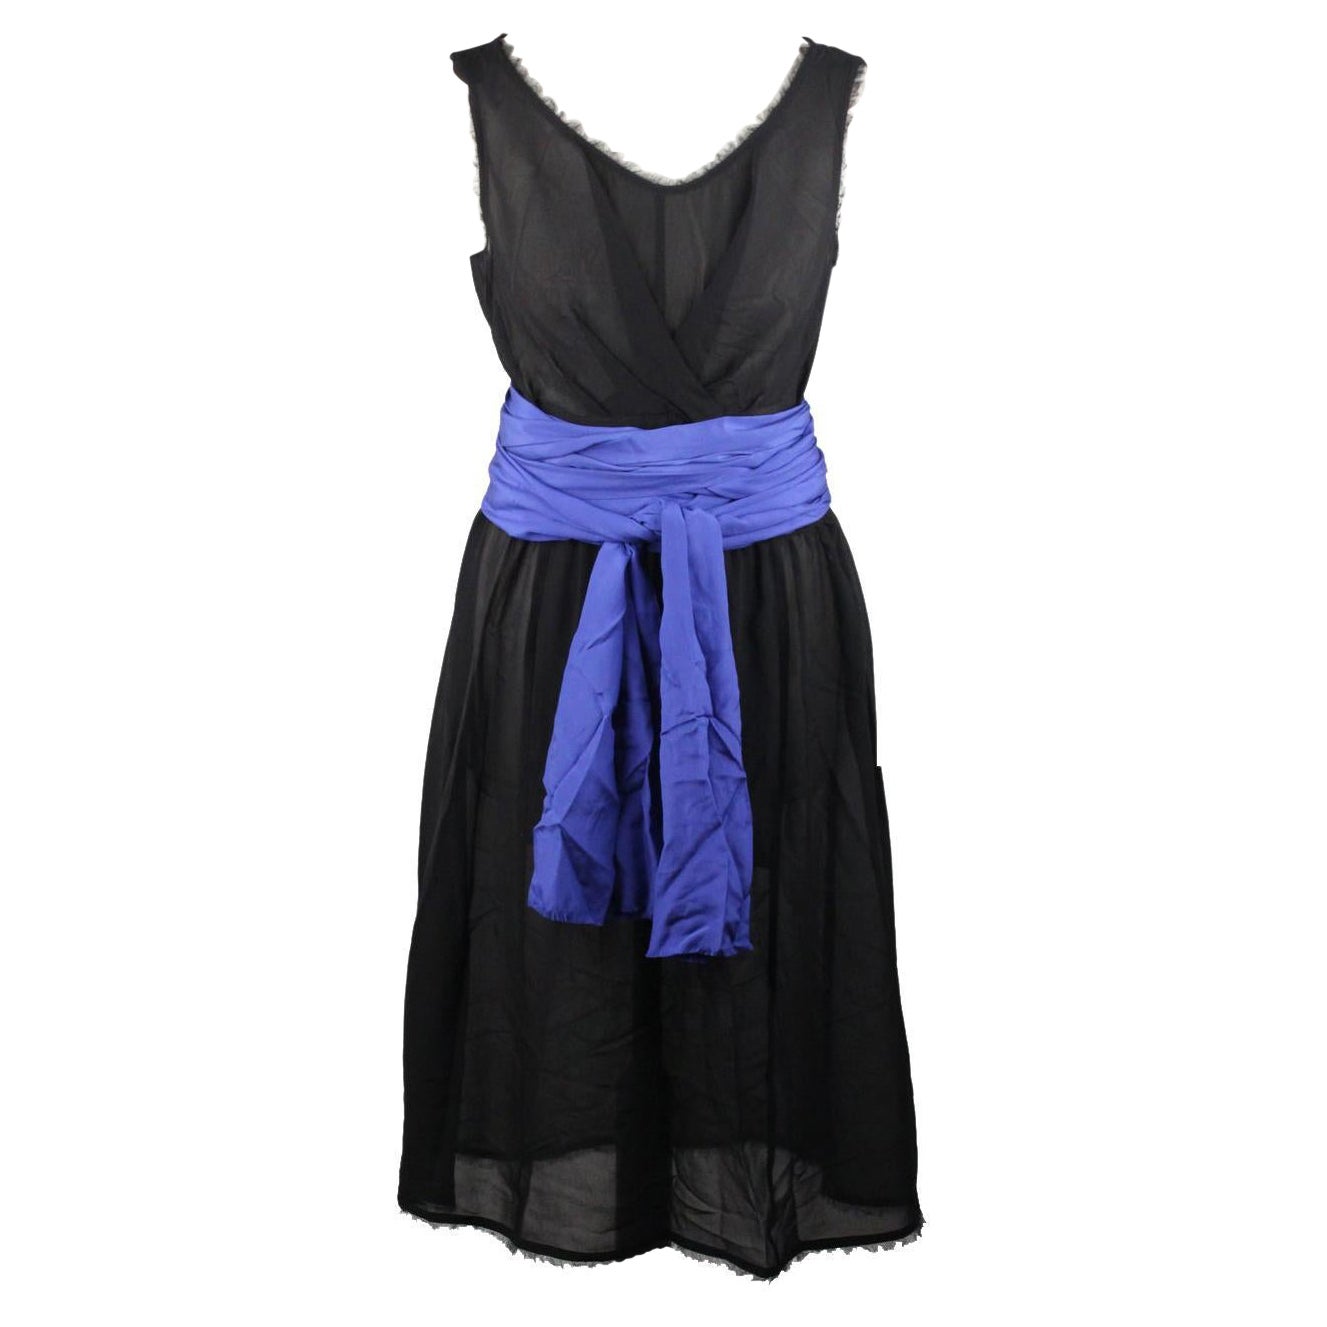 Fendi Black Silk Sleeveless Dress with Blue Belt Size 44 IT